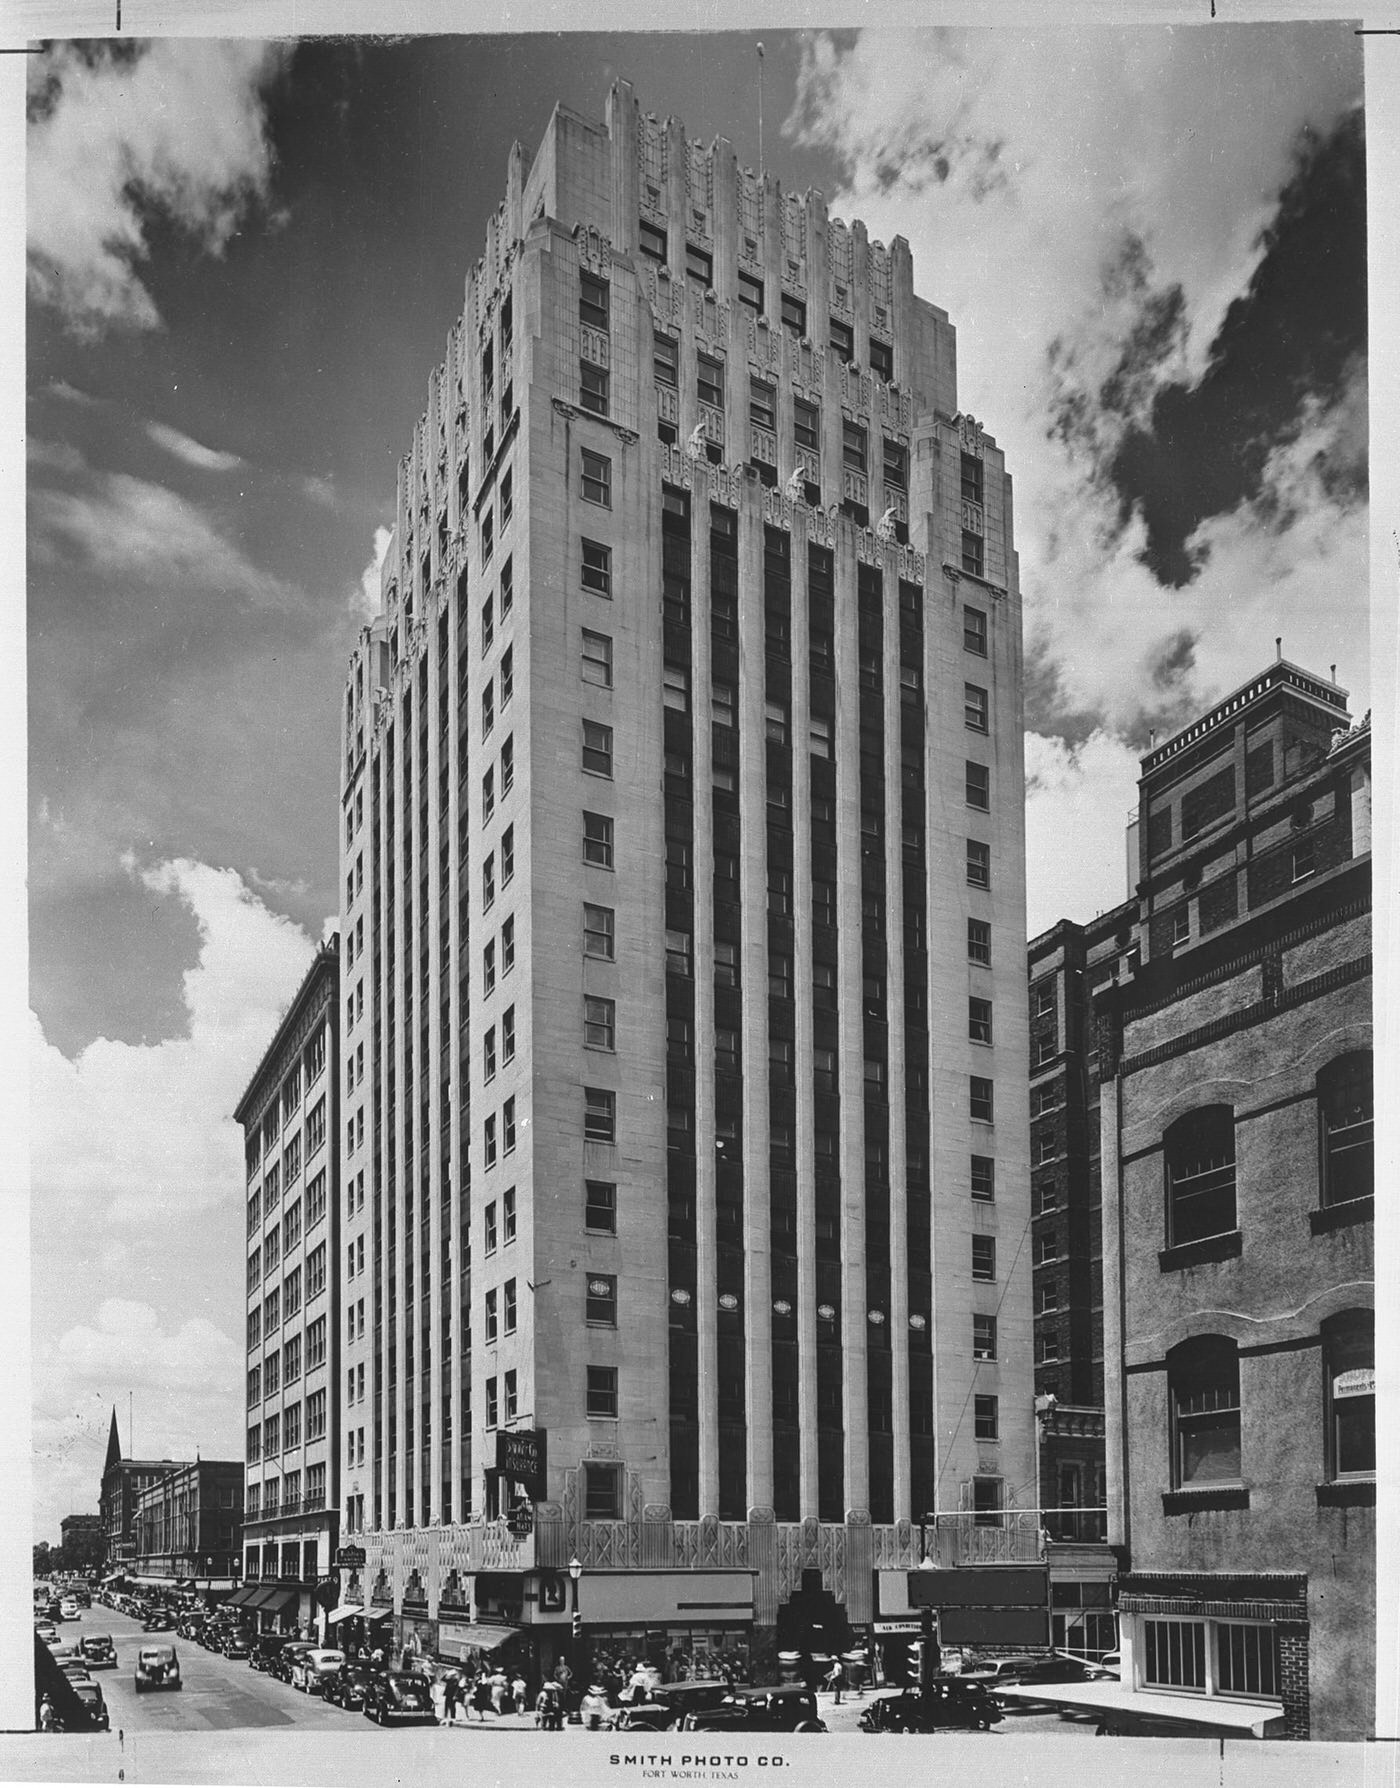 Sinclair building, 512 Main Street, downtown Fort Worth, Texas, 1942